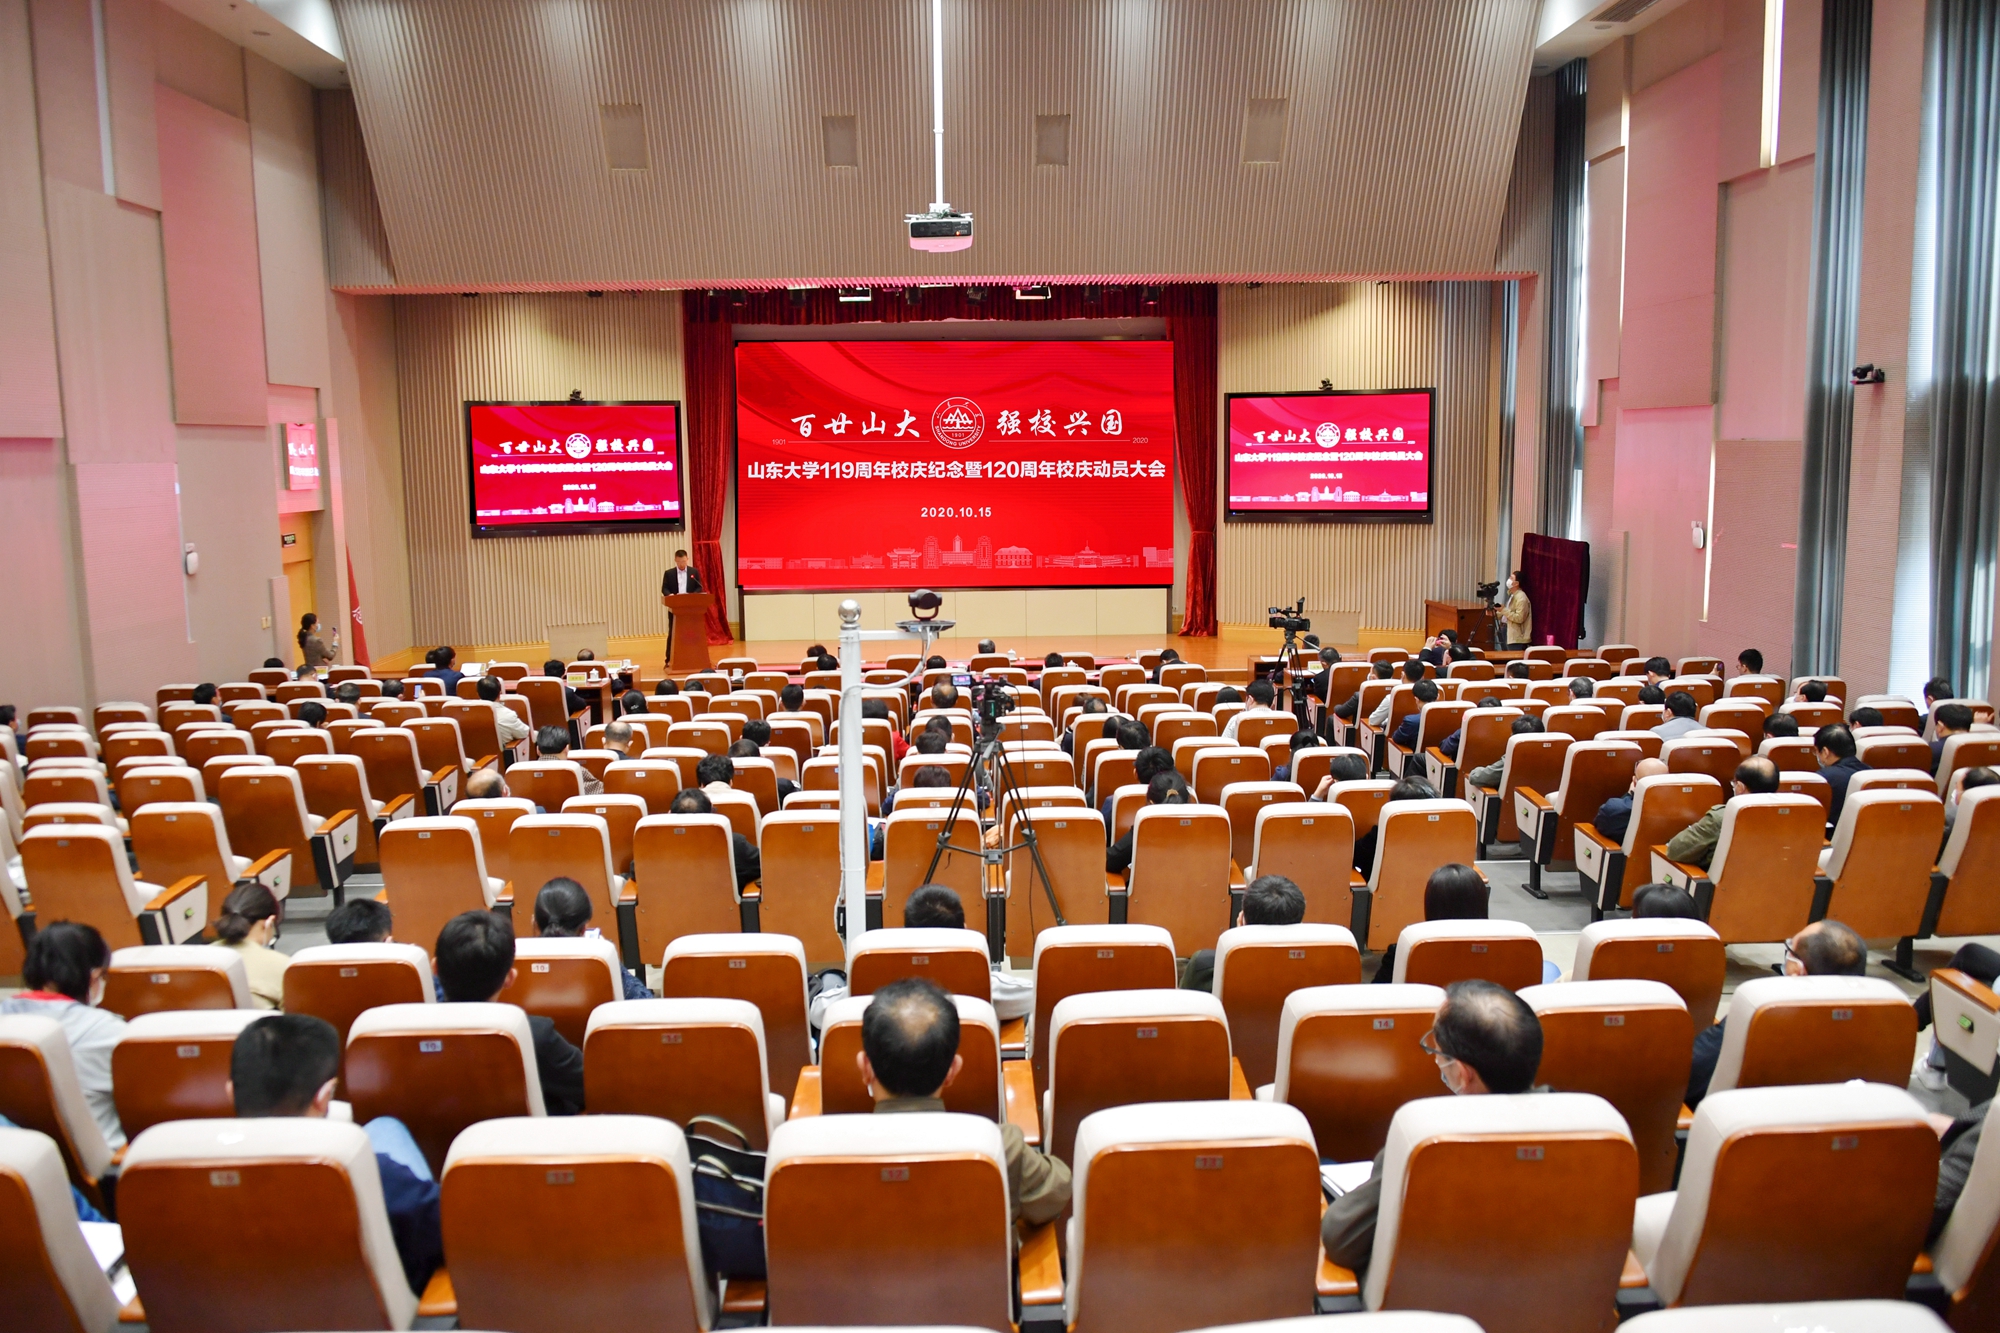 Image. Shandong University celebrates its 119th anniversary